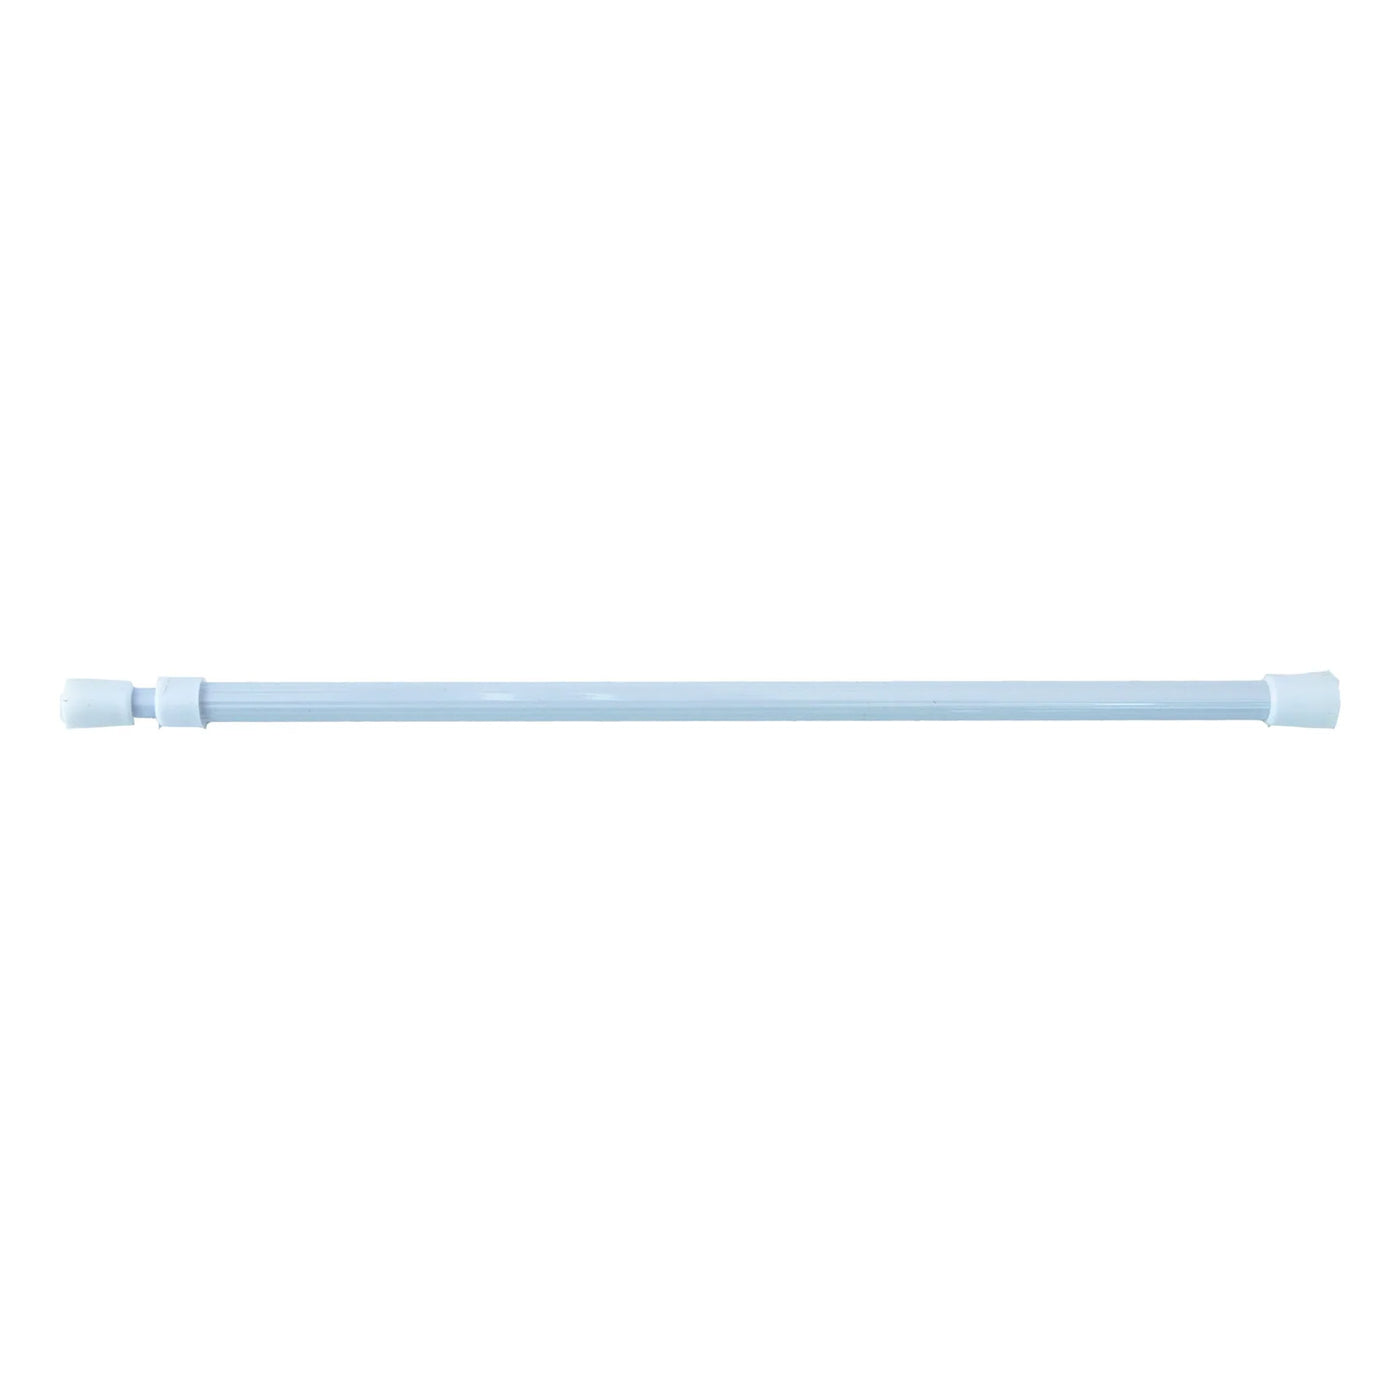 barkeeper® Aluminium Long (L) 41-71cm white • Pack of 2 • Tension rod